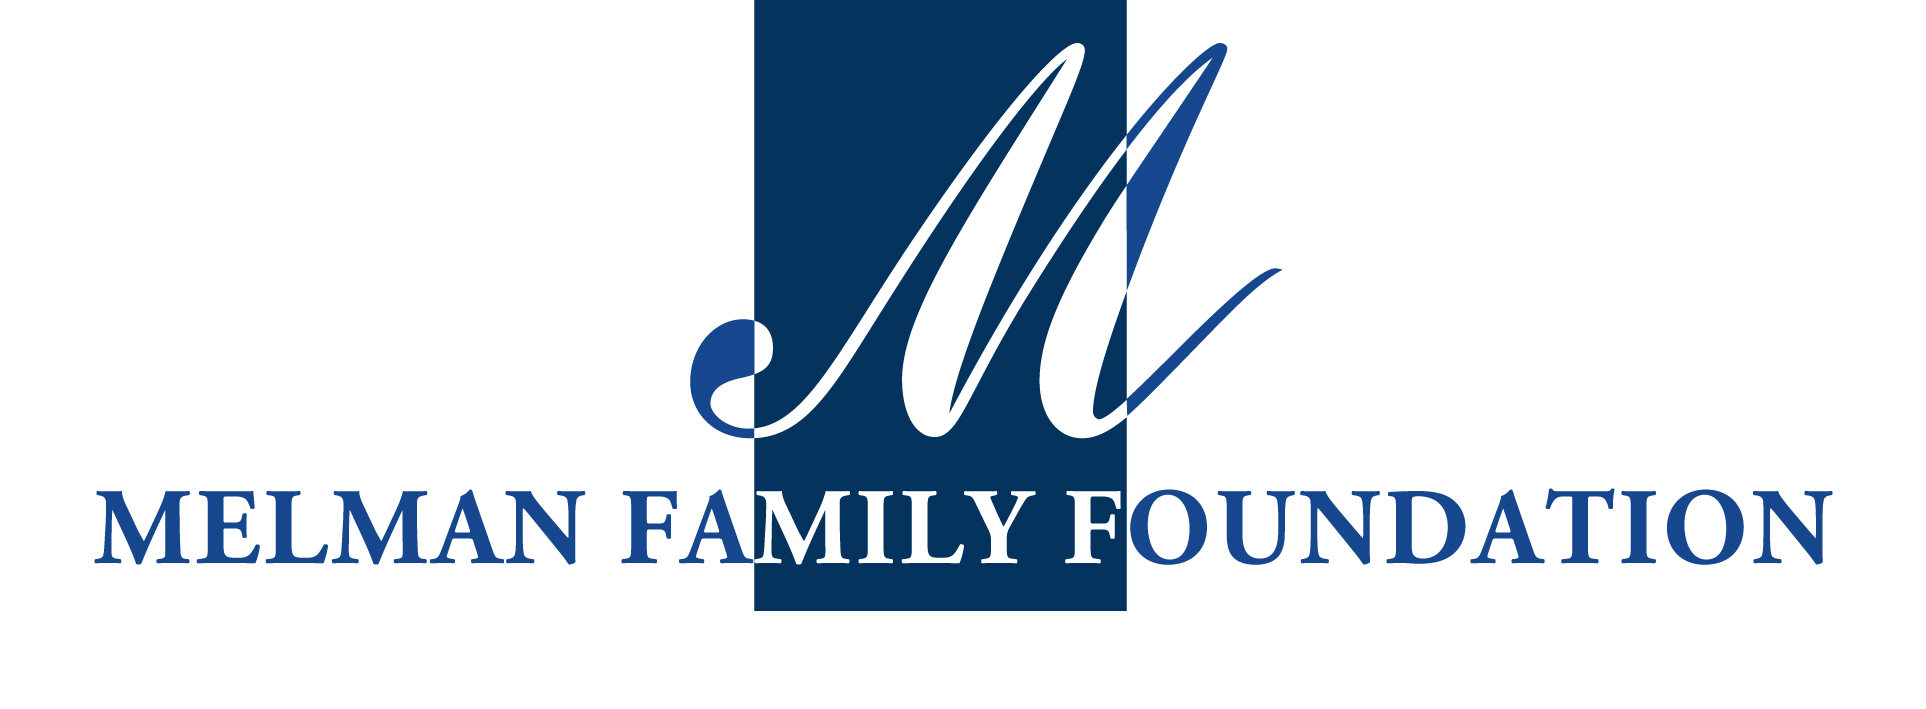 Melman Family Foundation